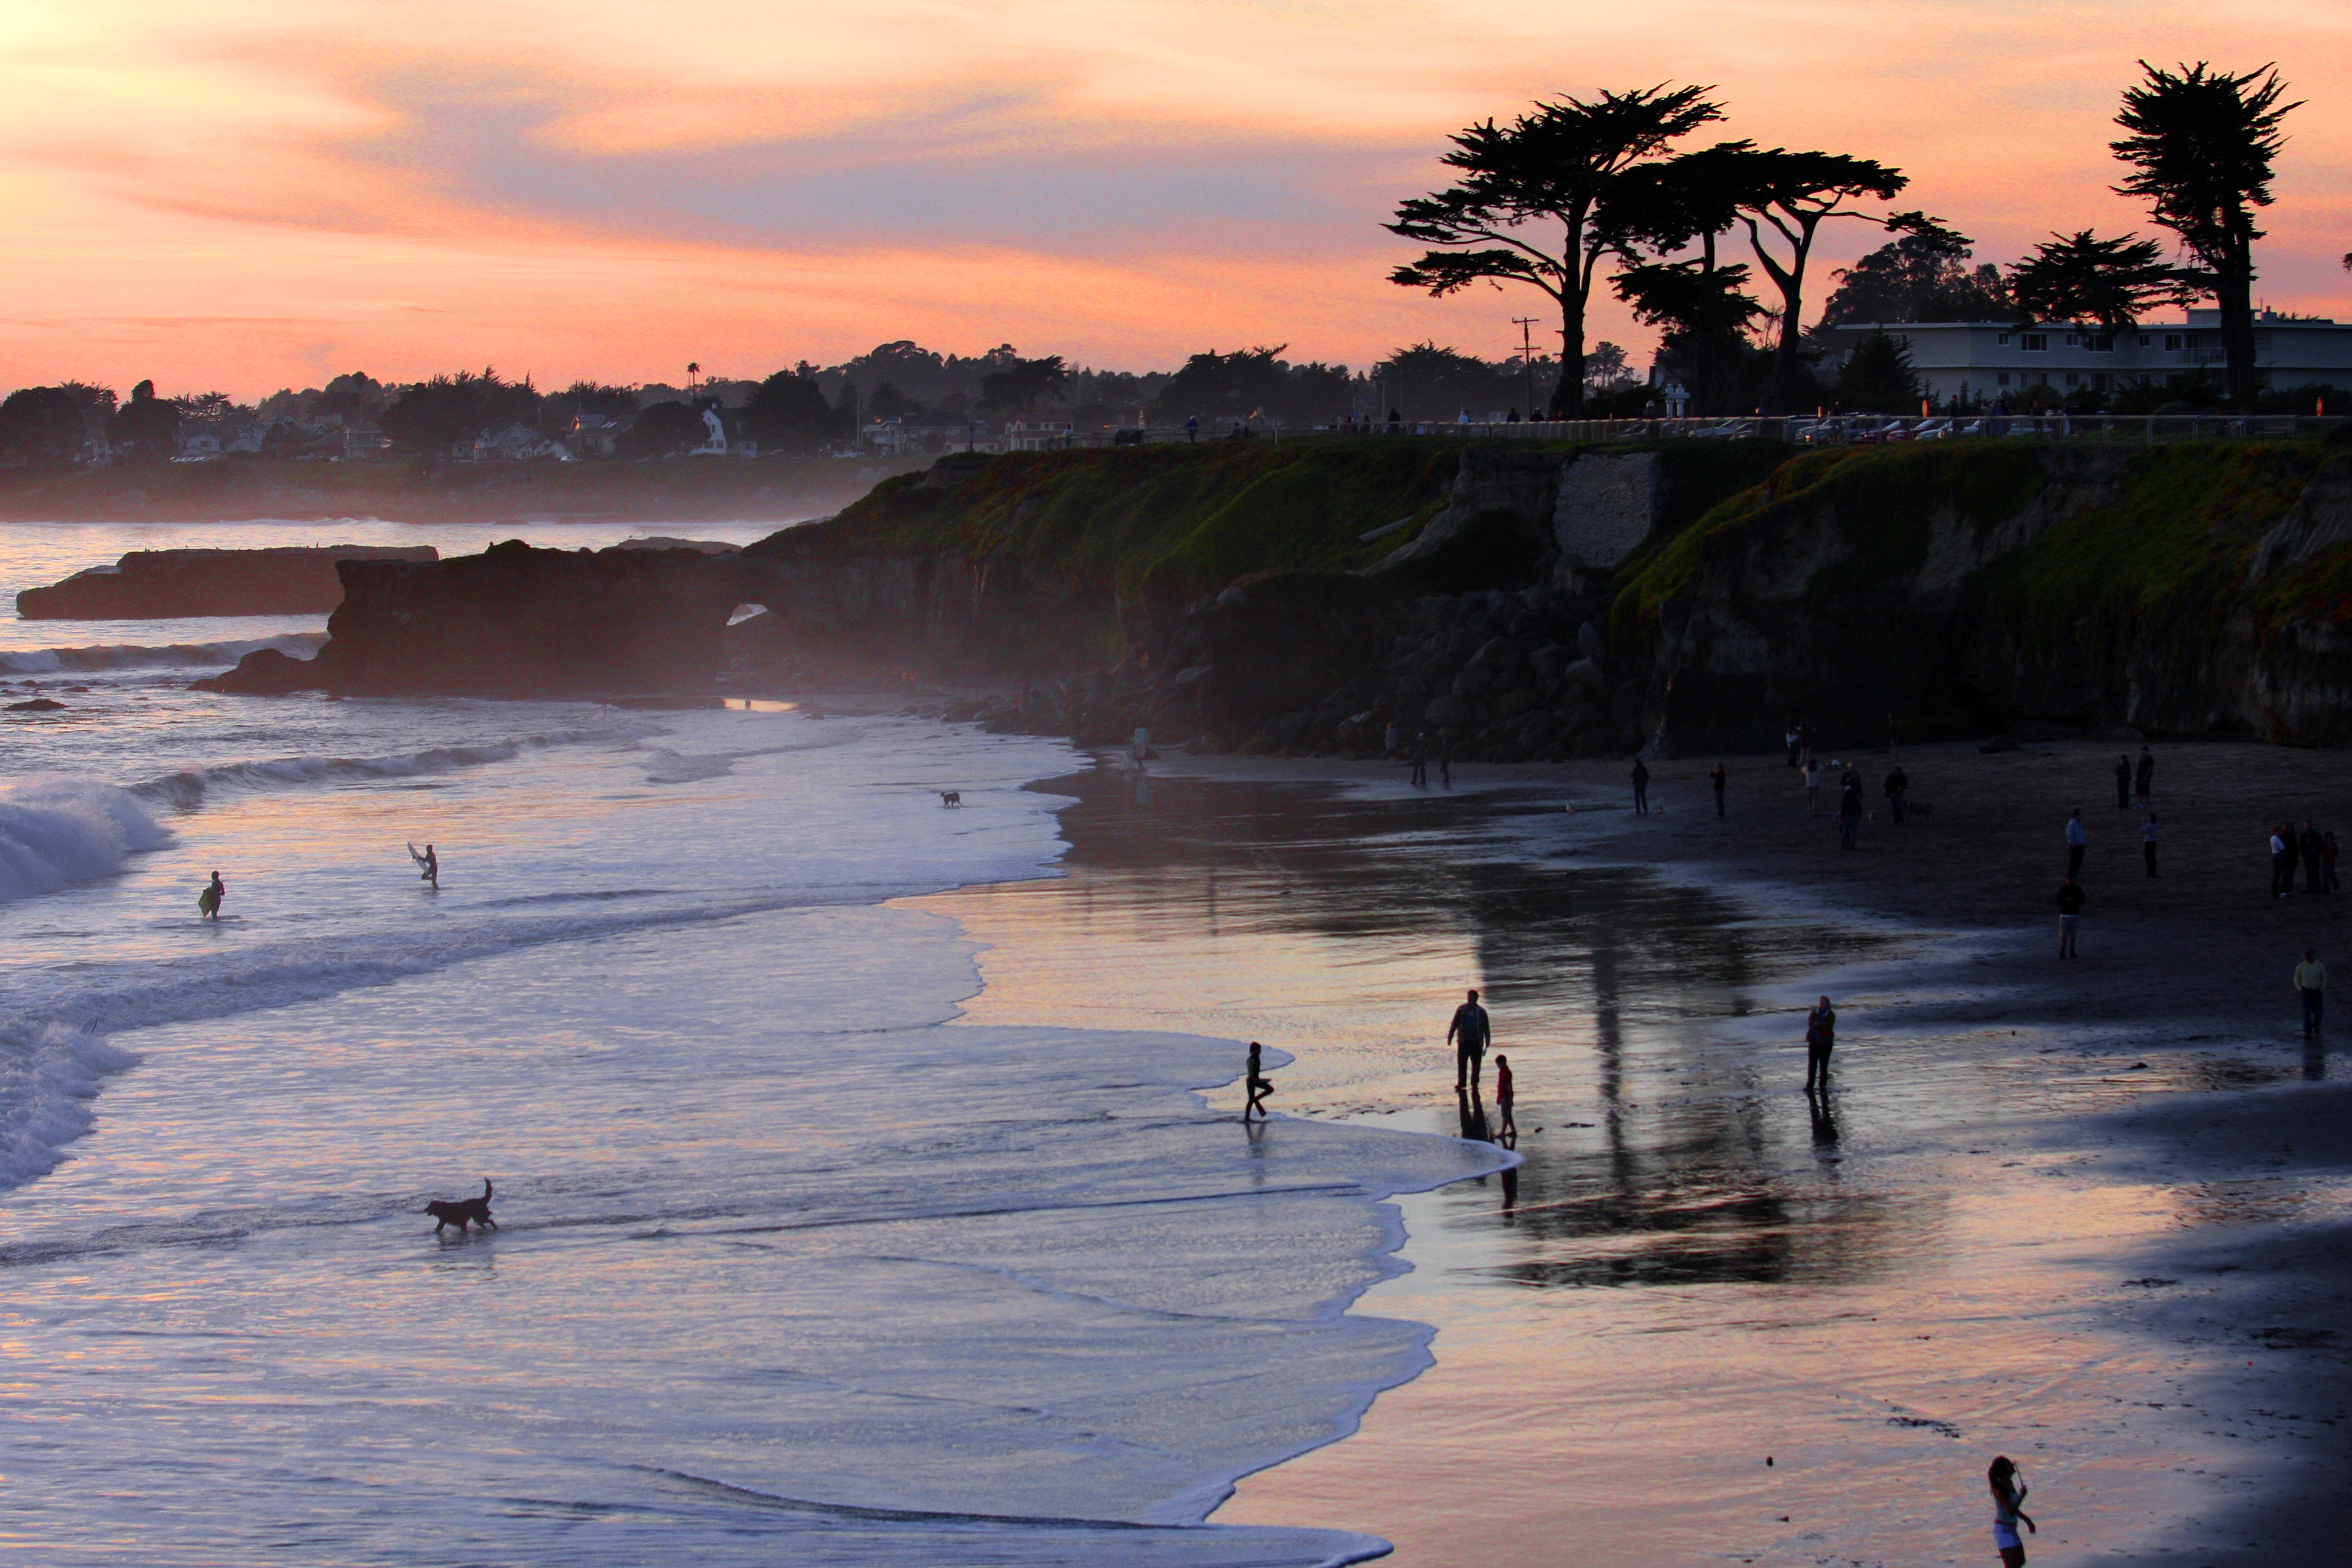 Its Beach in Santa Cruz, California
Photograph by Shmuel Thaler/Santa Cruz Sentinel